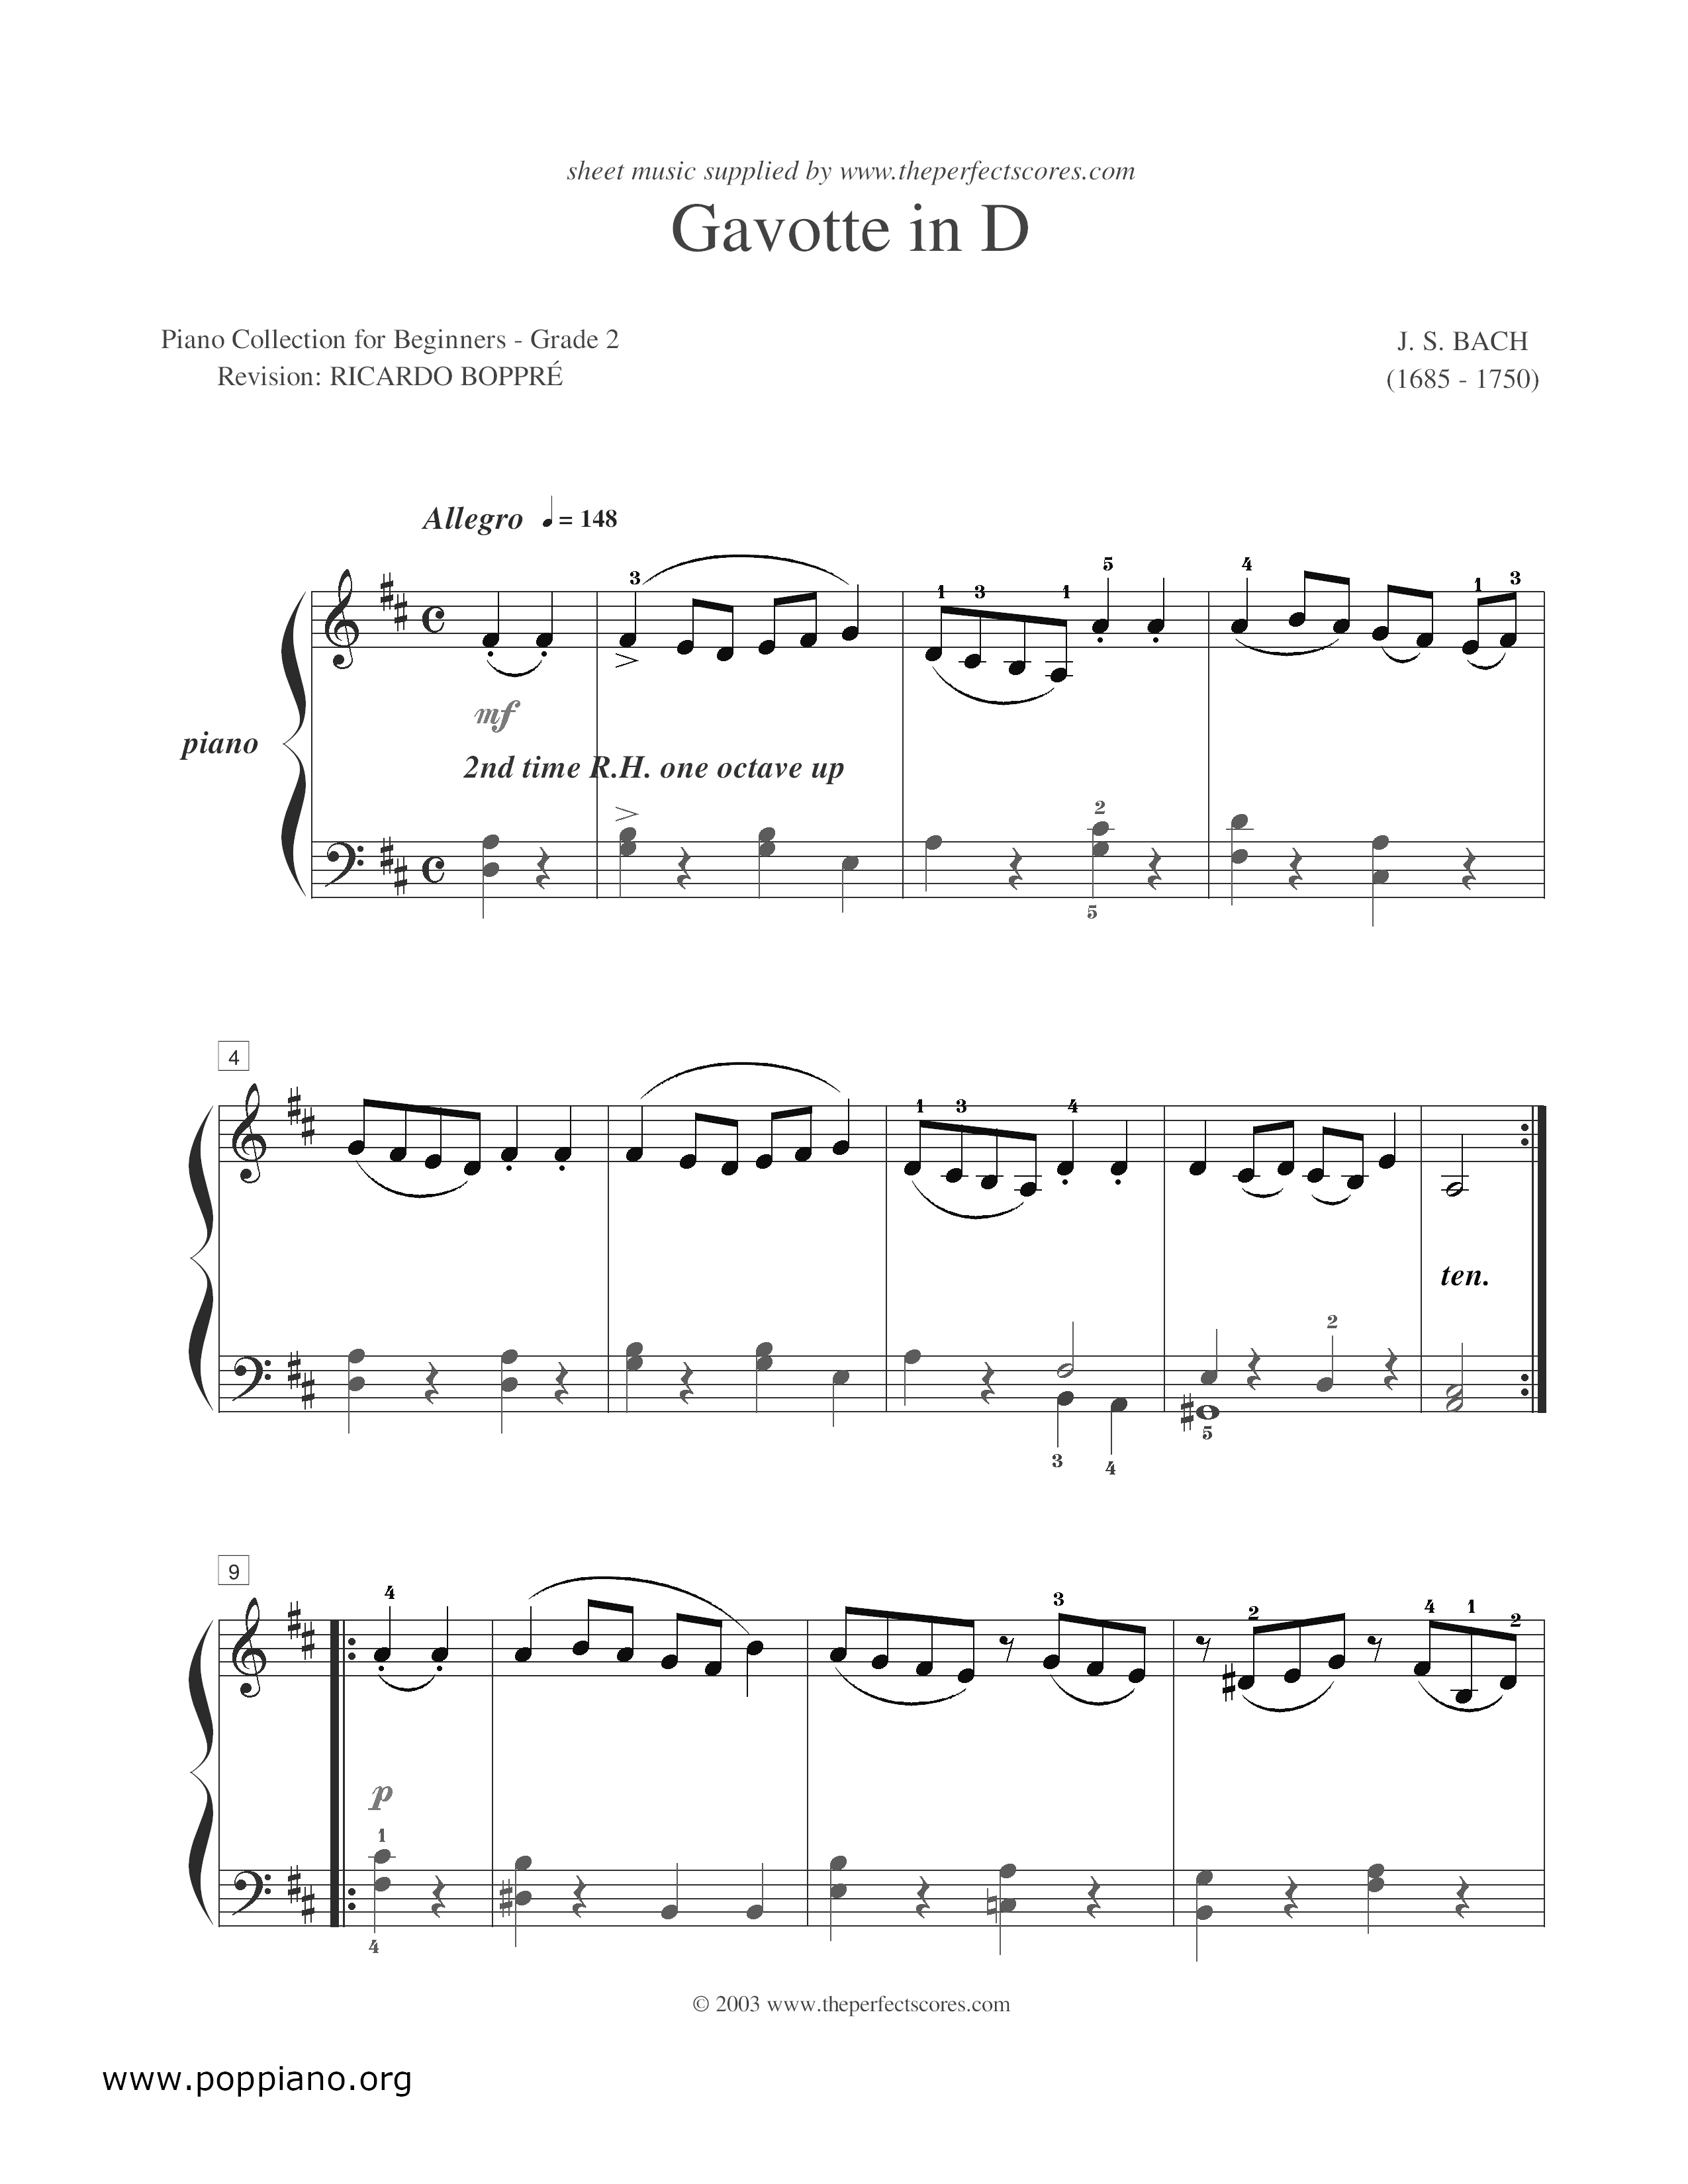 D大調加伏特舞曲 (Gavotte in D)ピアノ譜